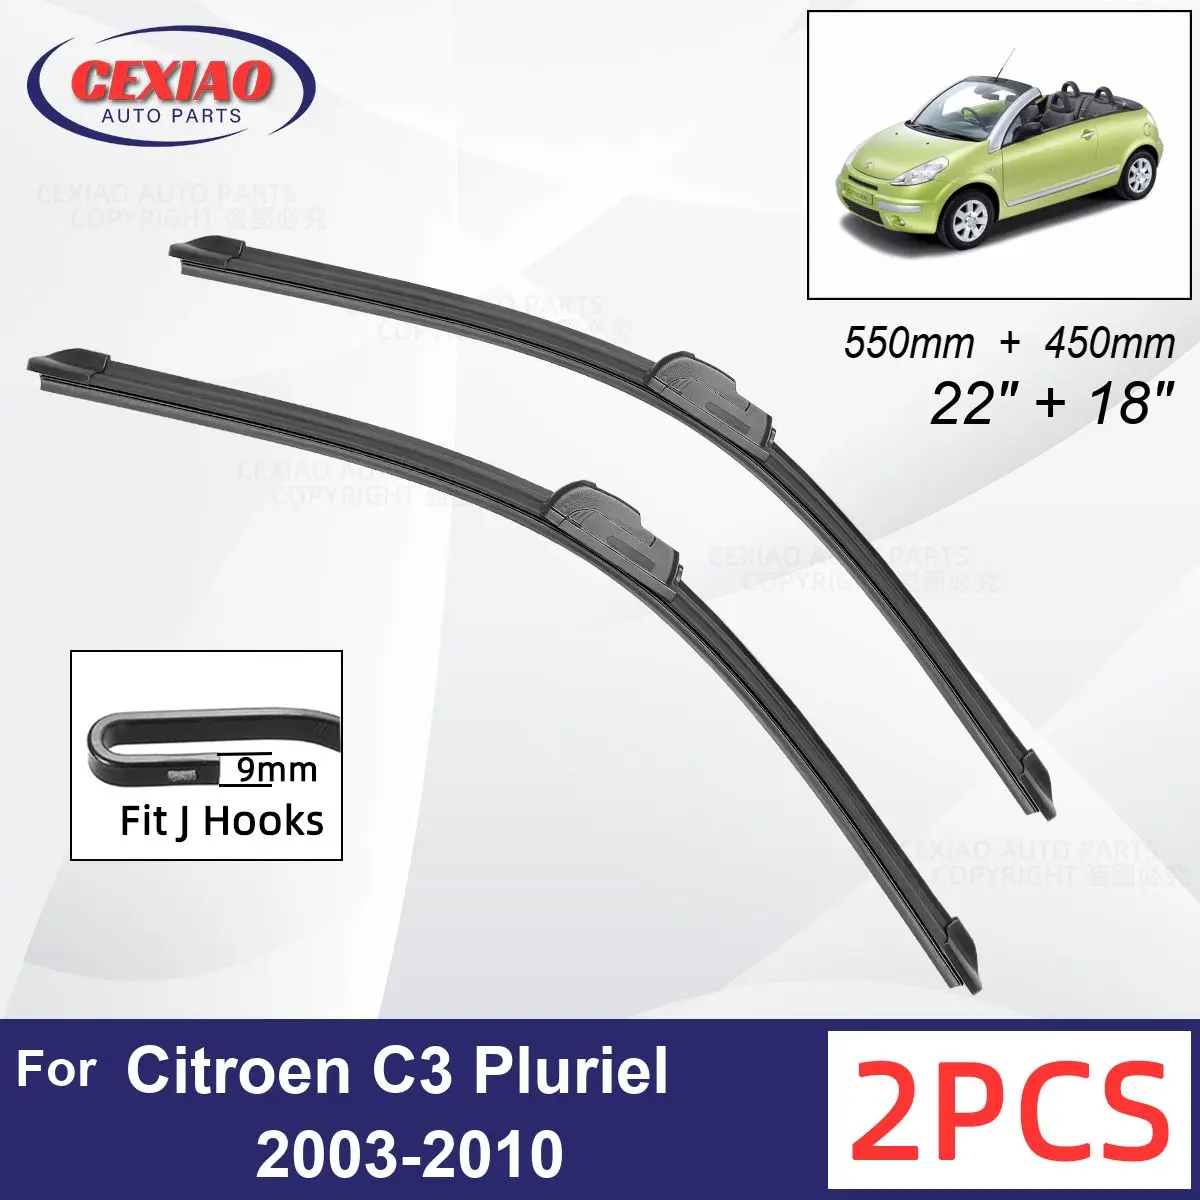 

Car Wiper For Citroen C3 Pluriel 2003-2010 Front Wiper Blades Soft Rubber Windscreen Wipers Auto Windshield 22" 18" 550mm 450mm